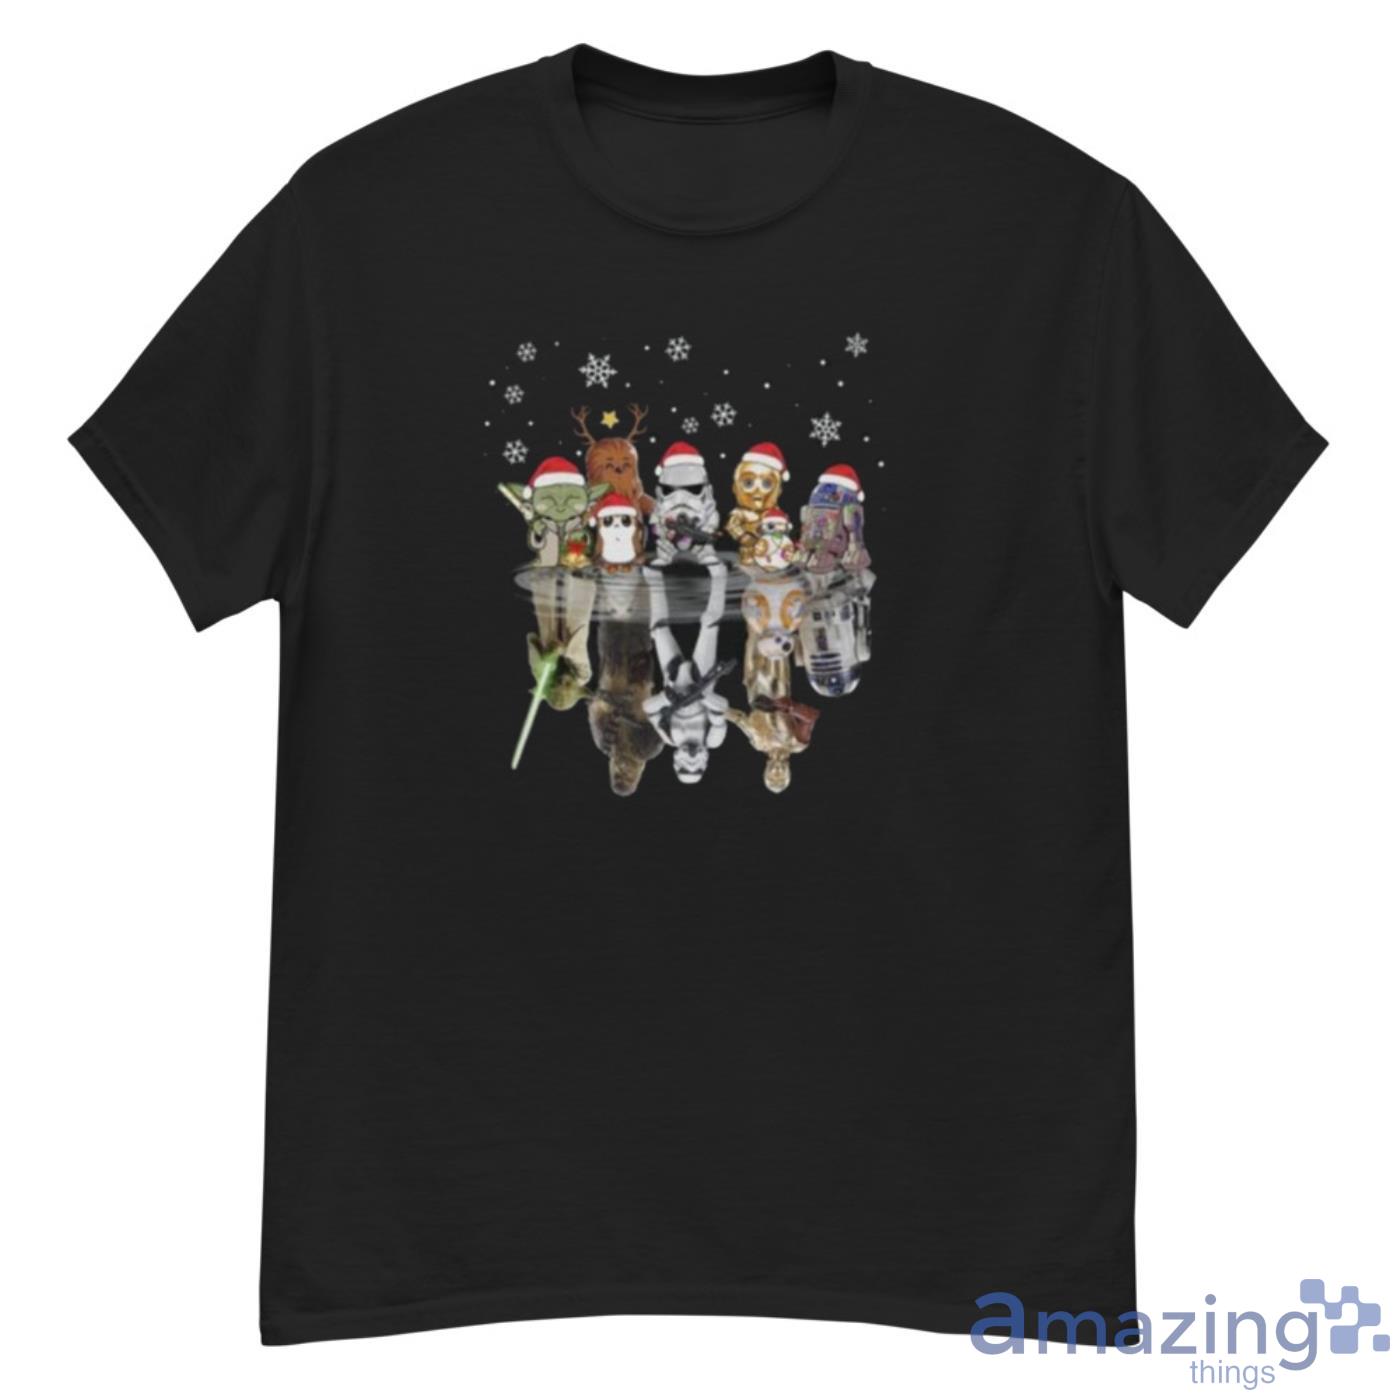 Star Wars Christmas Tee Shirt Disney Christmas Shirt - G500 Men’s Classic T-Shirt